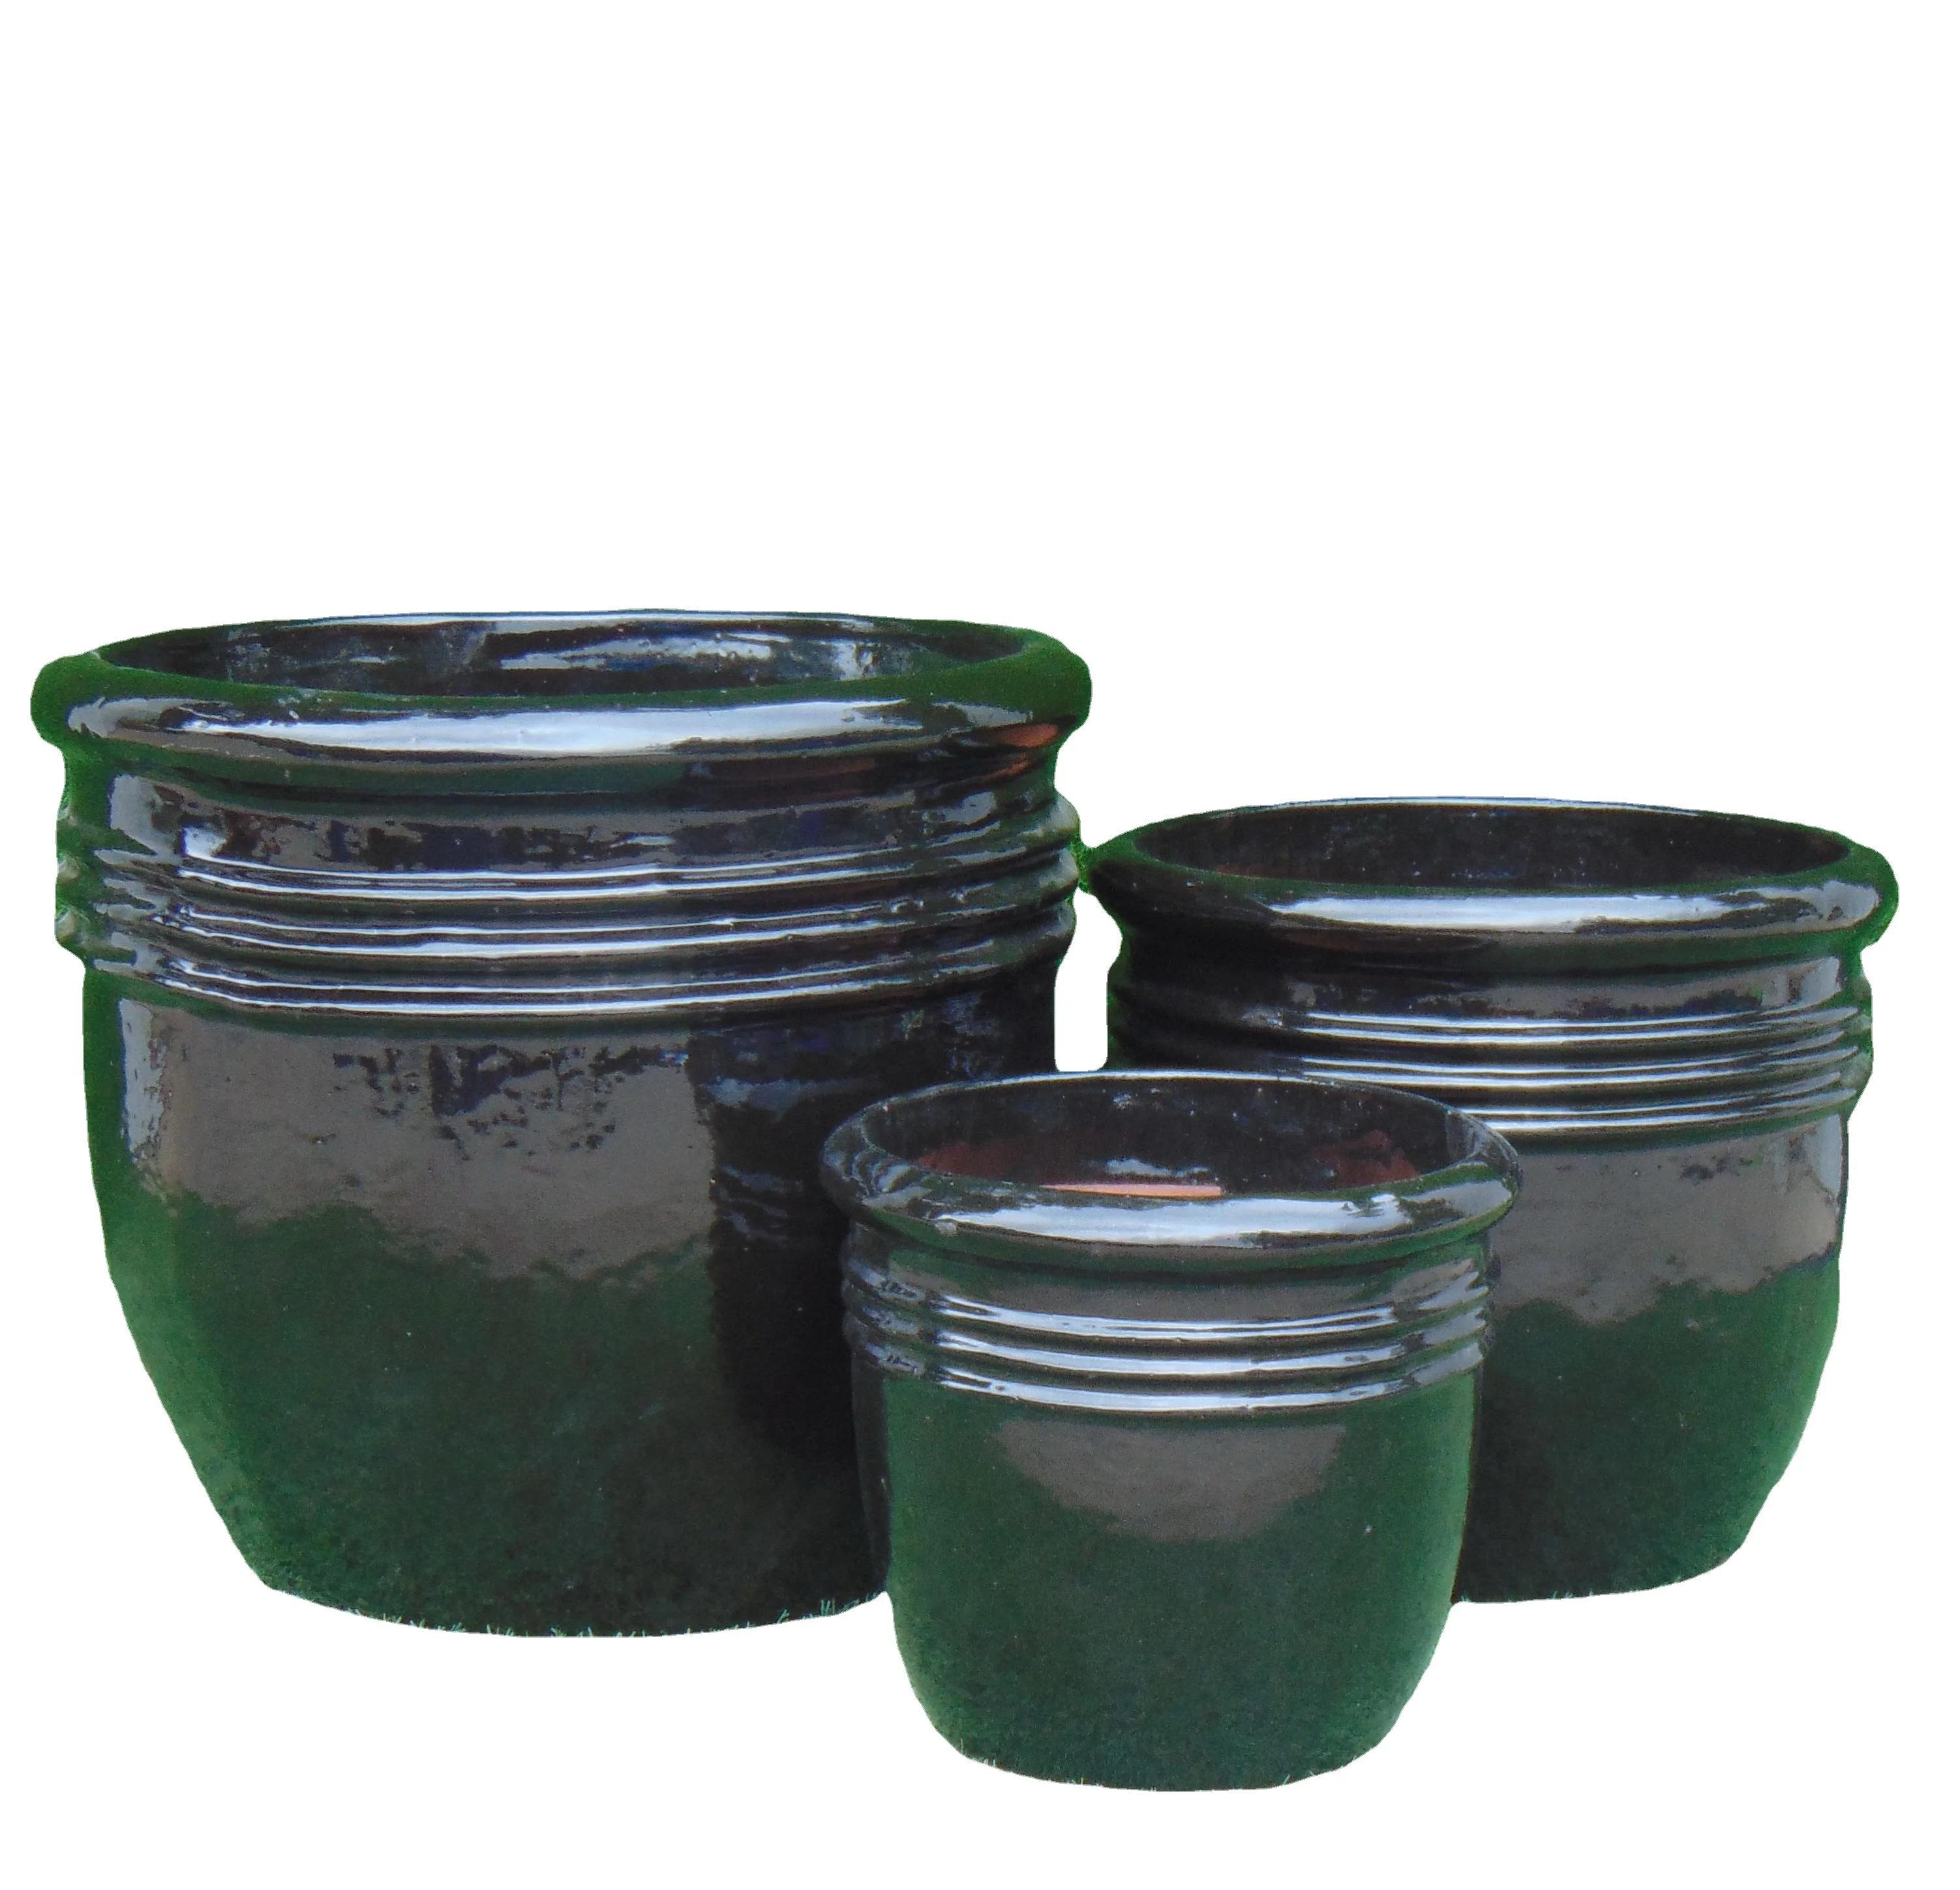 Terracotta Glazed Ceramic Planter Kit Outdoor Designed Clay Pots for Home Nursery Garden Plant Clamp for Room